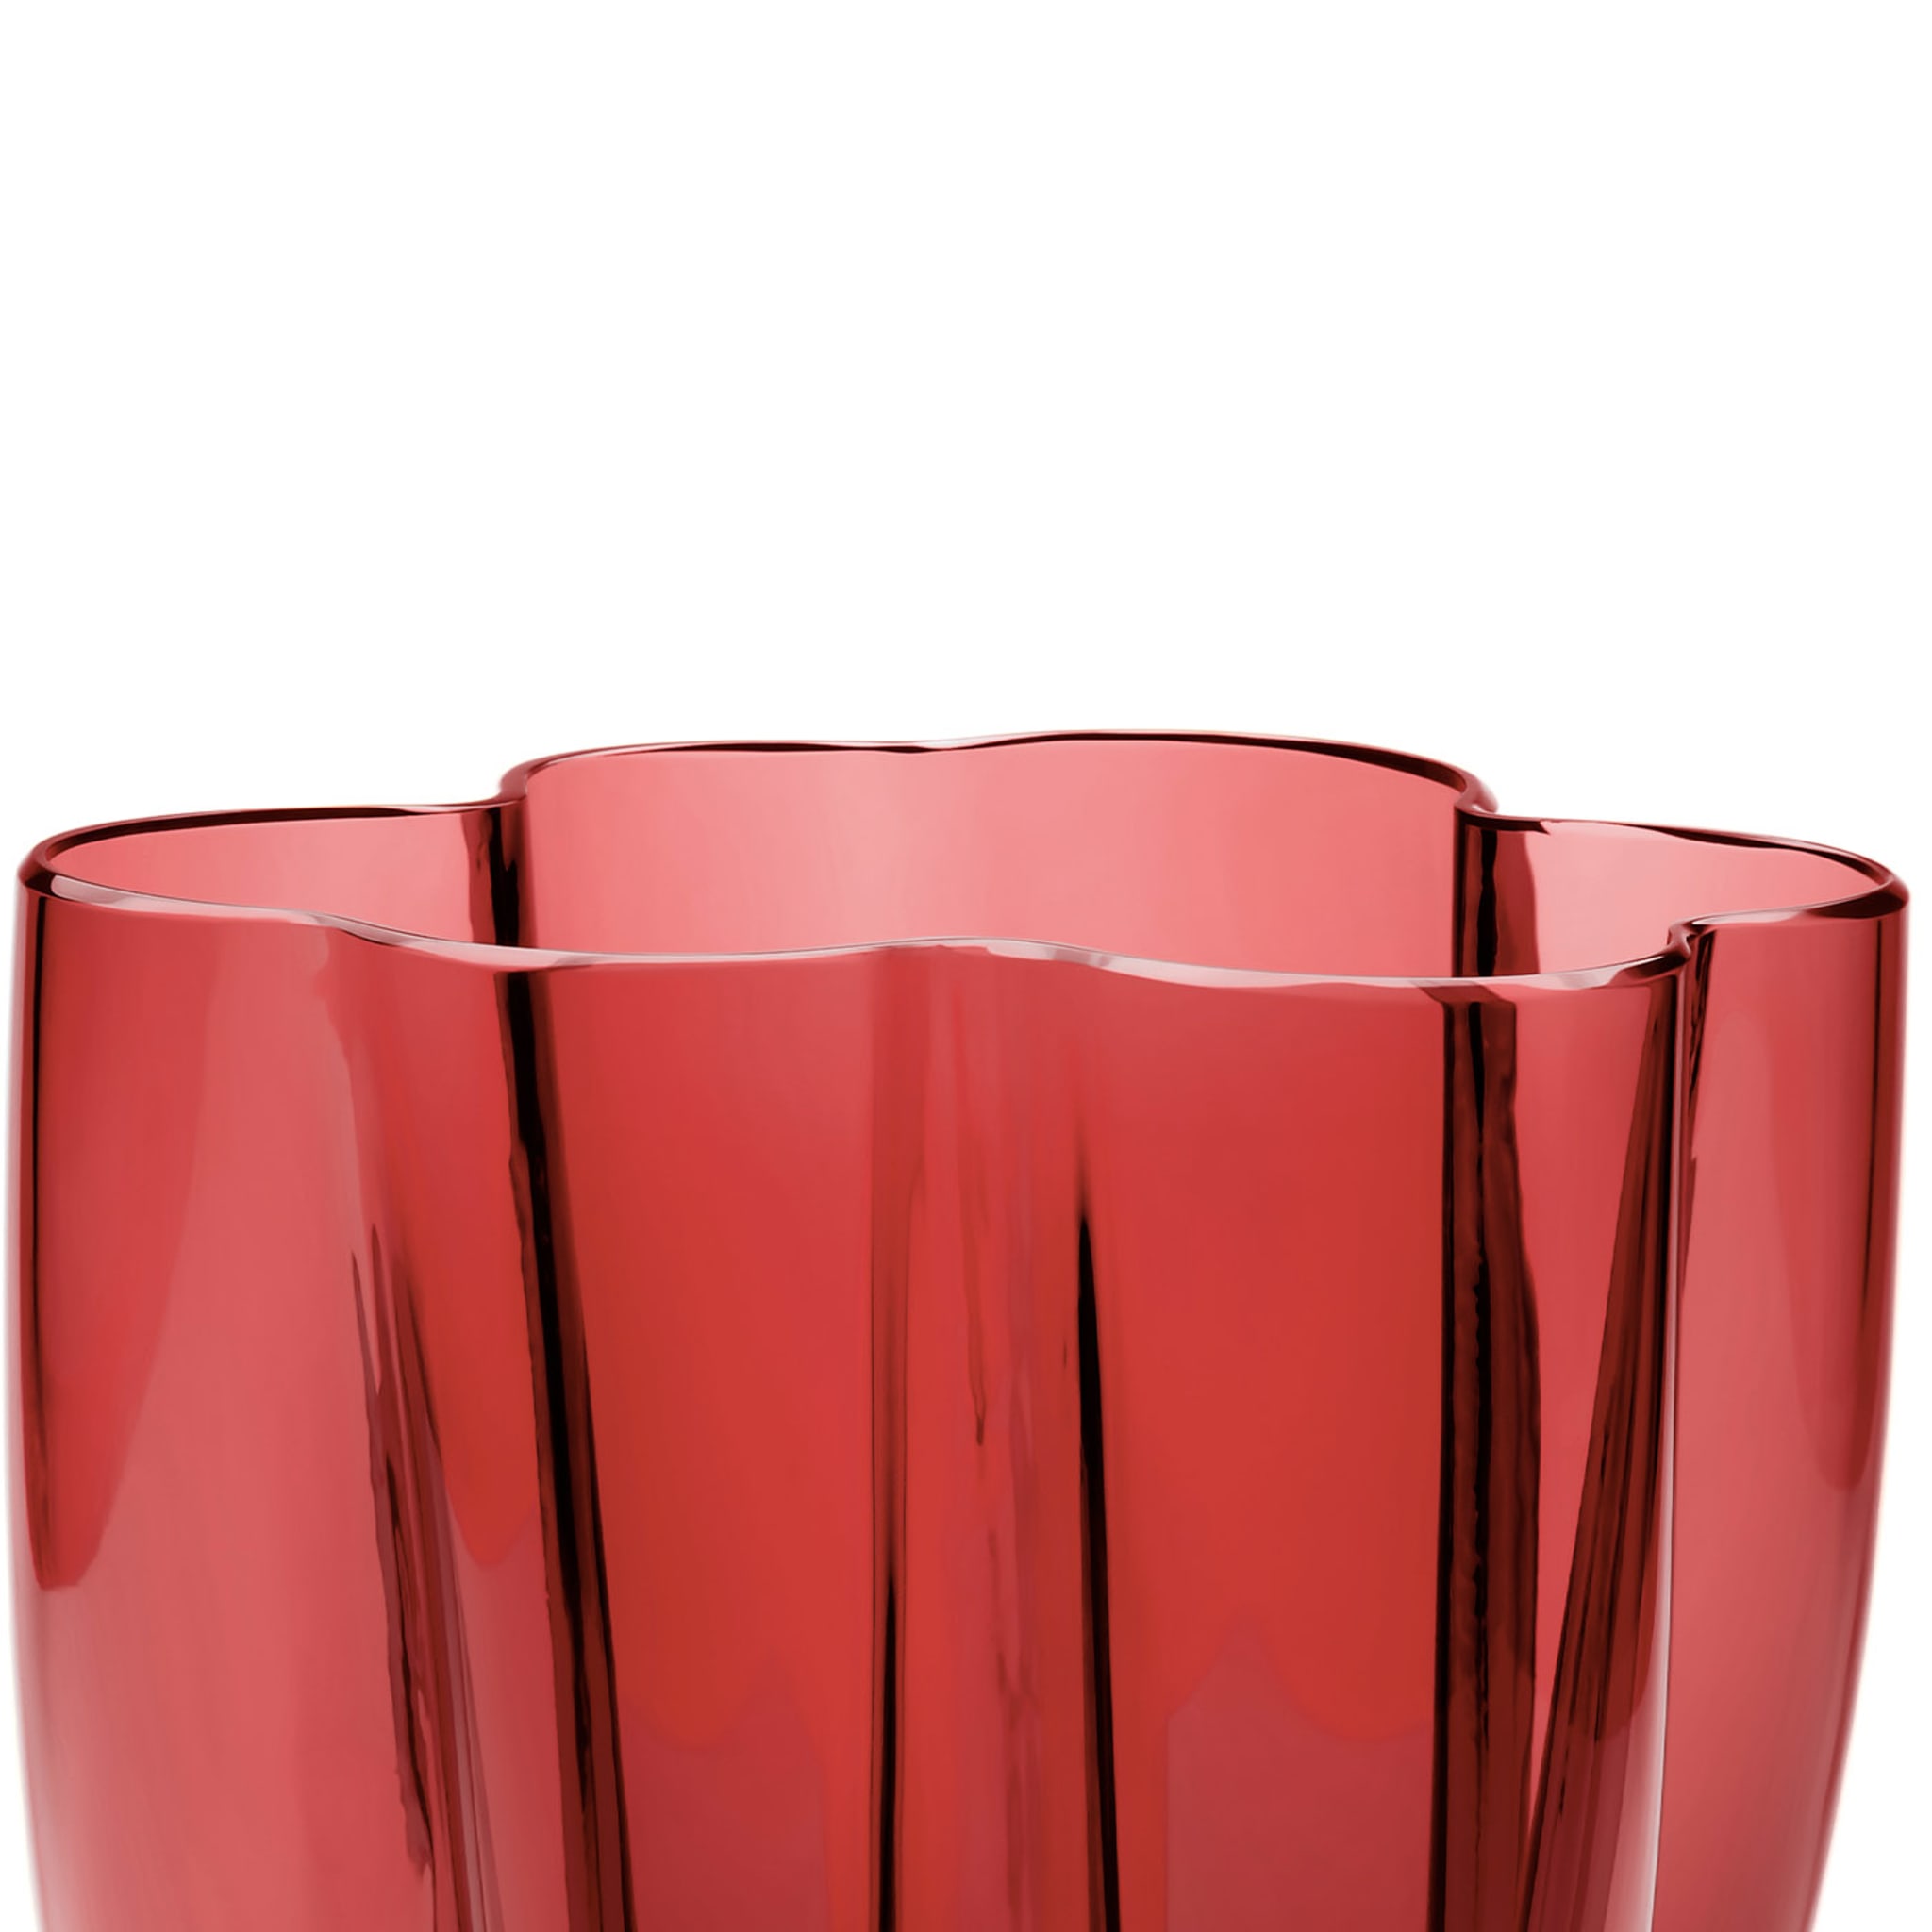 Petalo Oriental Red Small Vase - Alternative view 3